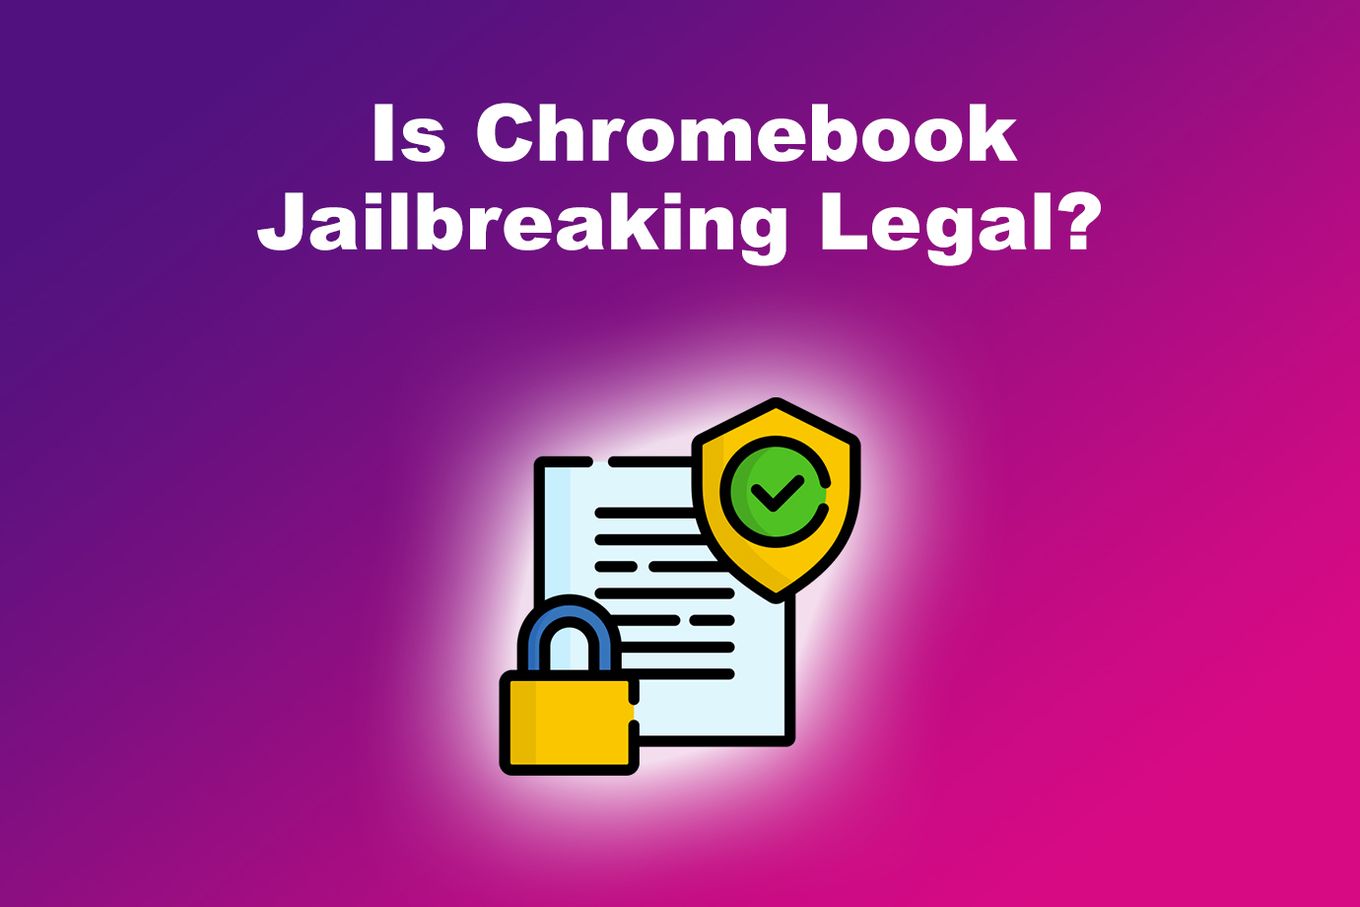 Is Chromebook jailbreaking legal